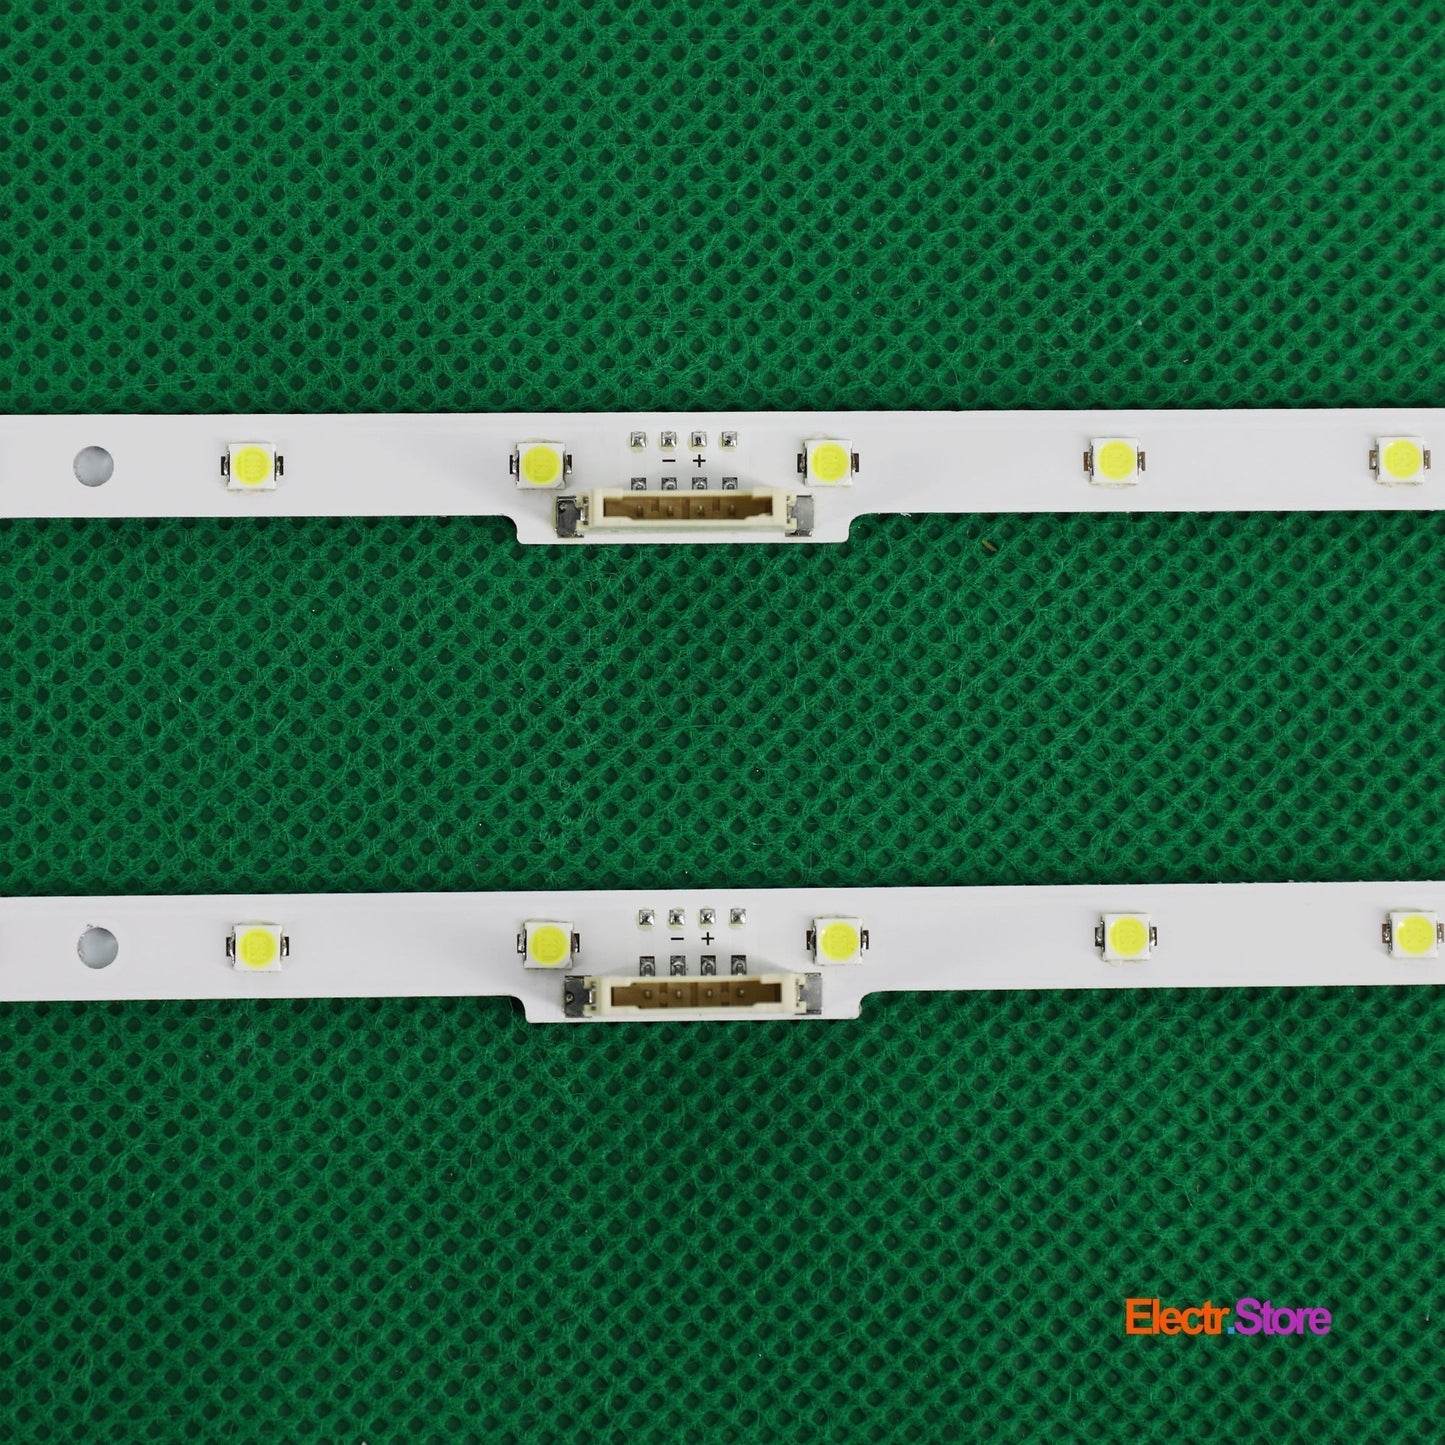 LED Backlight Strip Kits, AOT_40_NU7100F, LM41-00550A, LM41-00549A, BN96-45955A, 2X23LED (2 pcs/kit), for TV 40" SAMSUNG: UE40NU7180UXZG, UE40NU7180UXZT, UE40NU7182UXXH, UE40NU7189UXZG 40" LED Backlights LM41-00550A Samsung Electr.Store